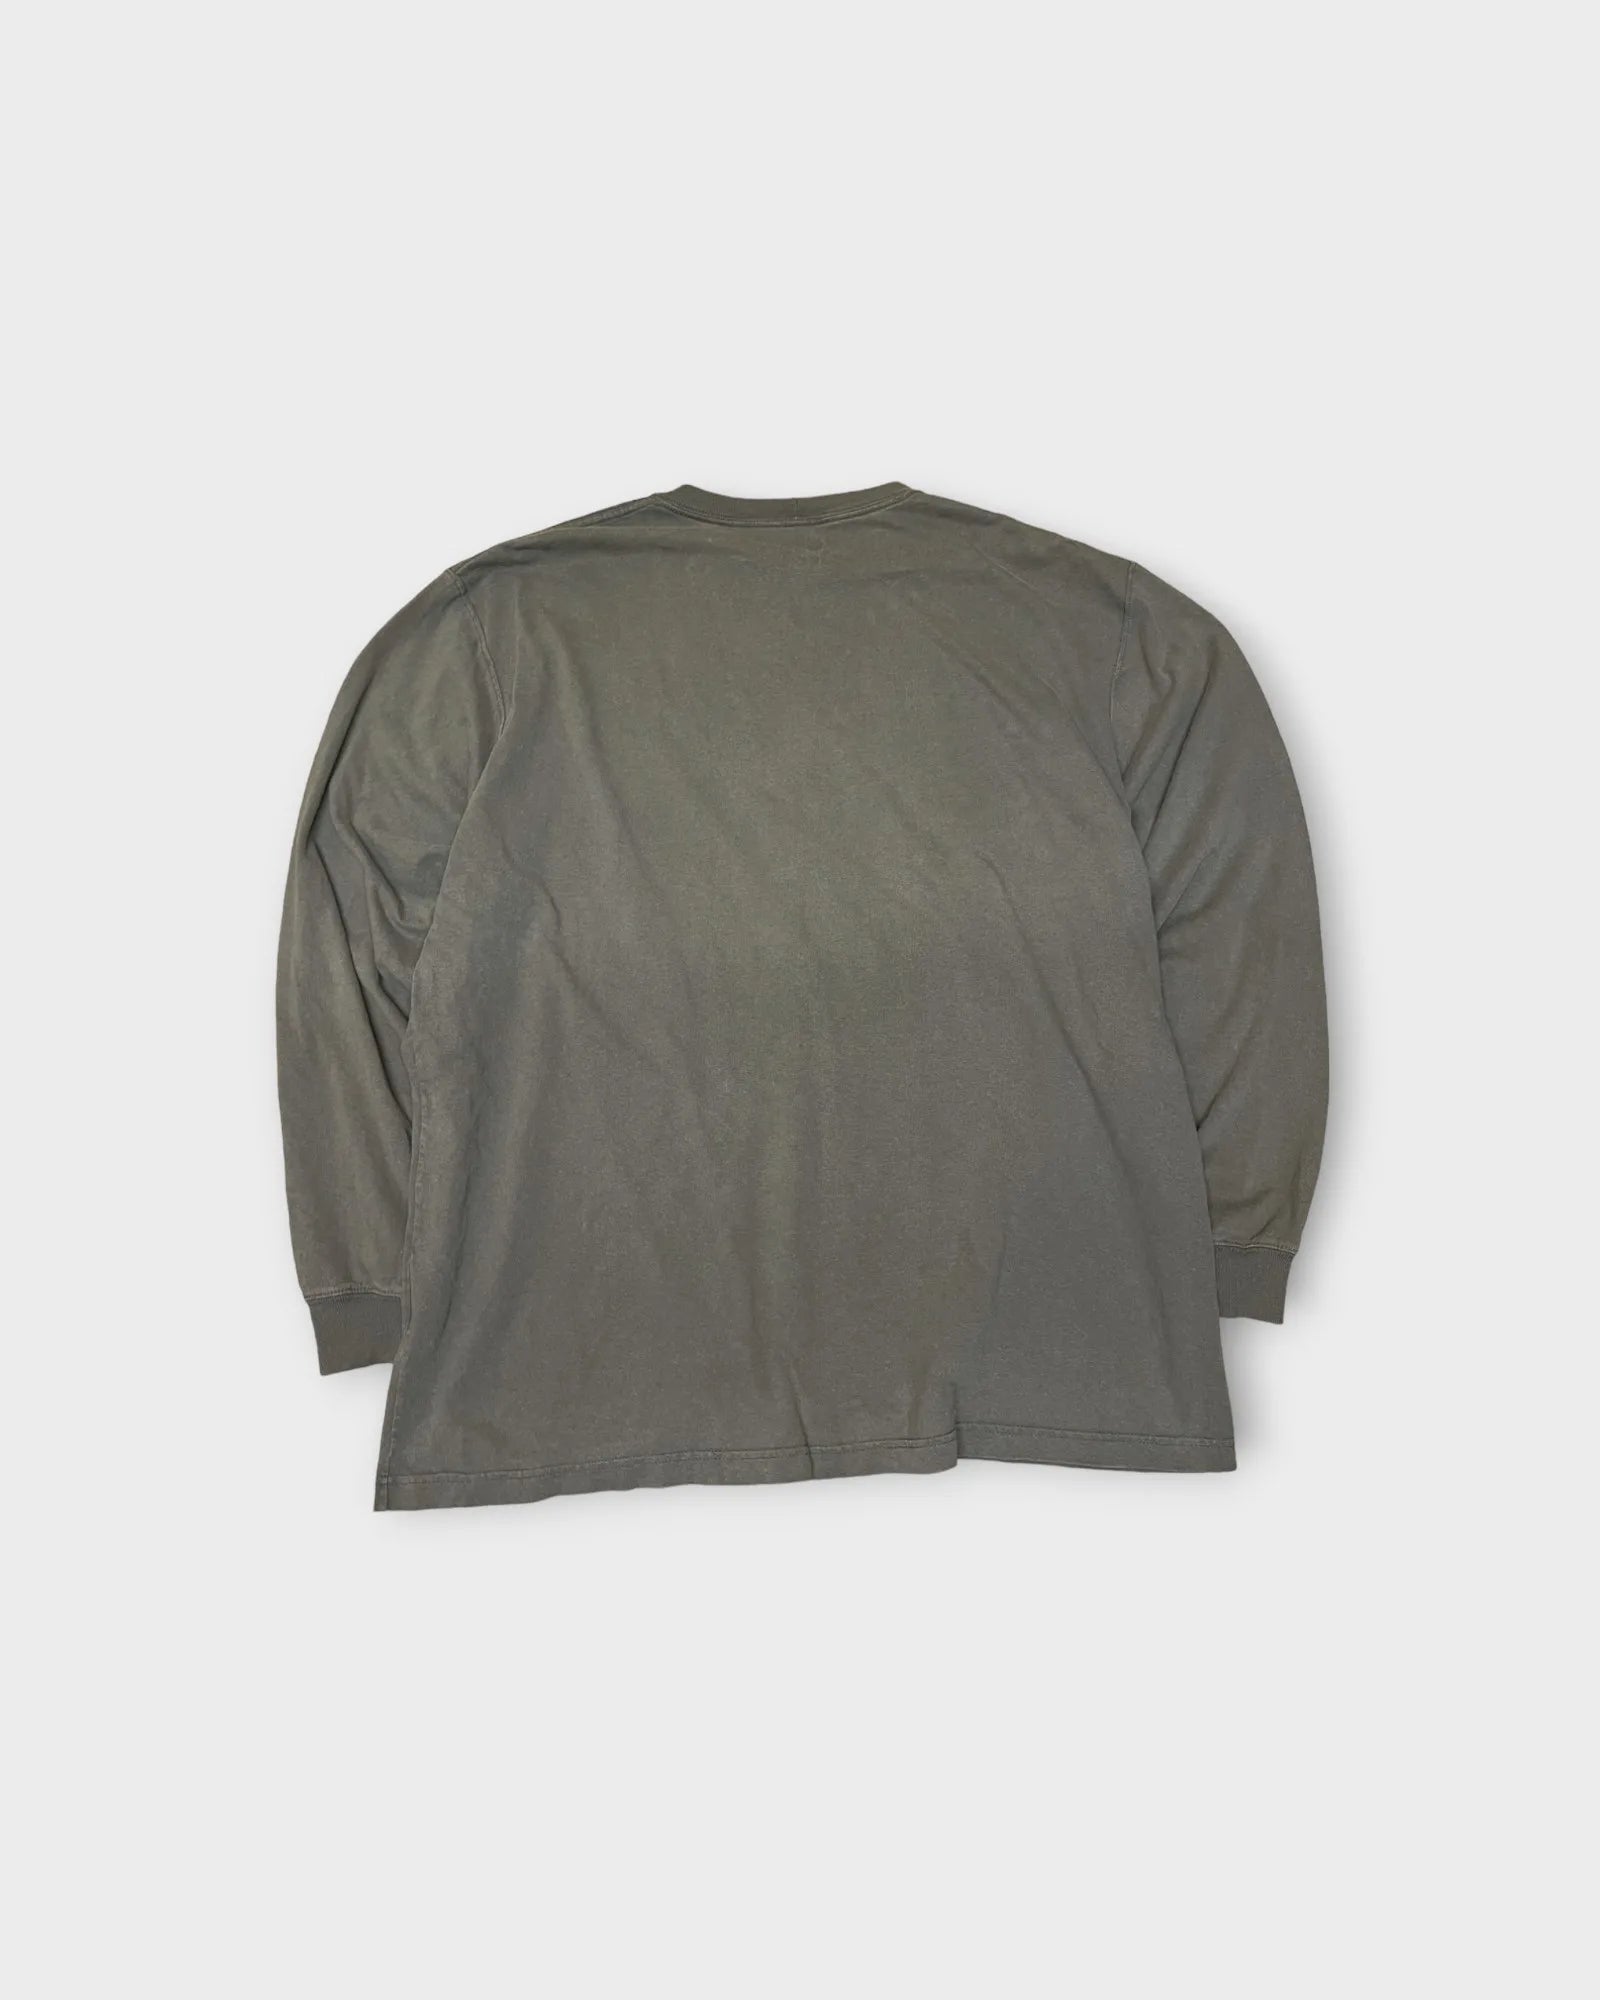 Vintage Carhartt Long-sleeve Shirt - XL